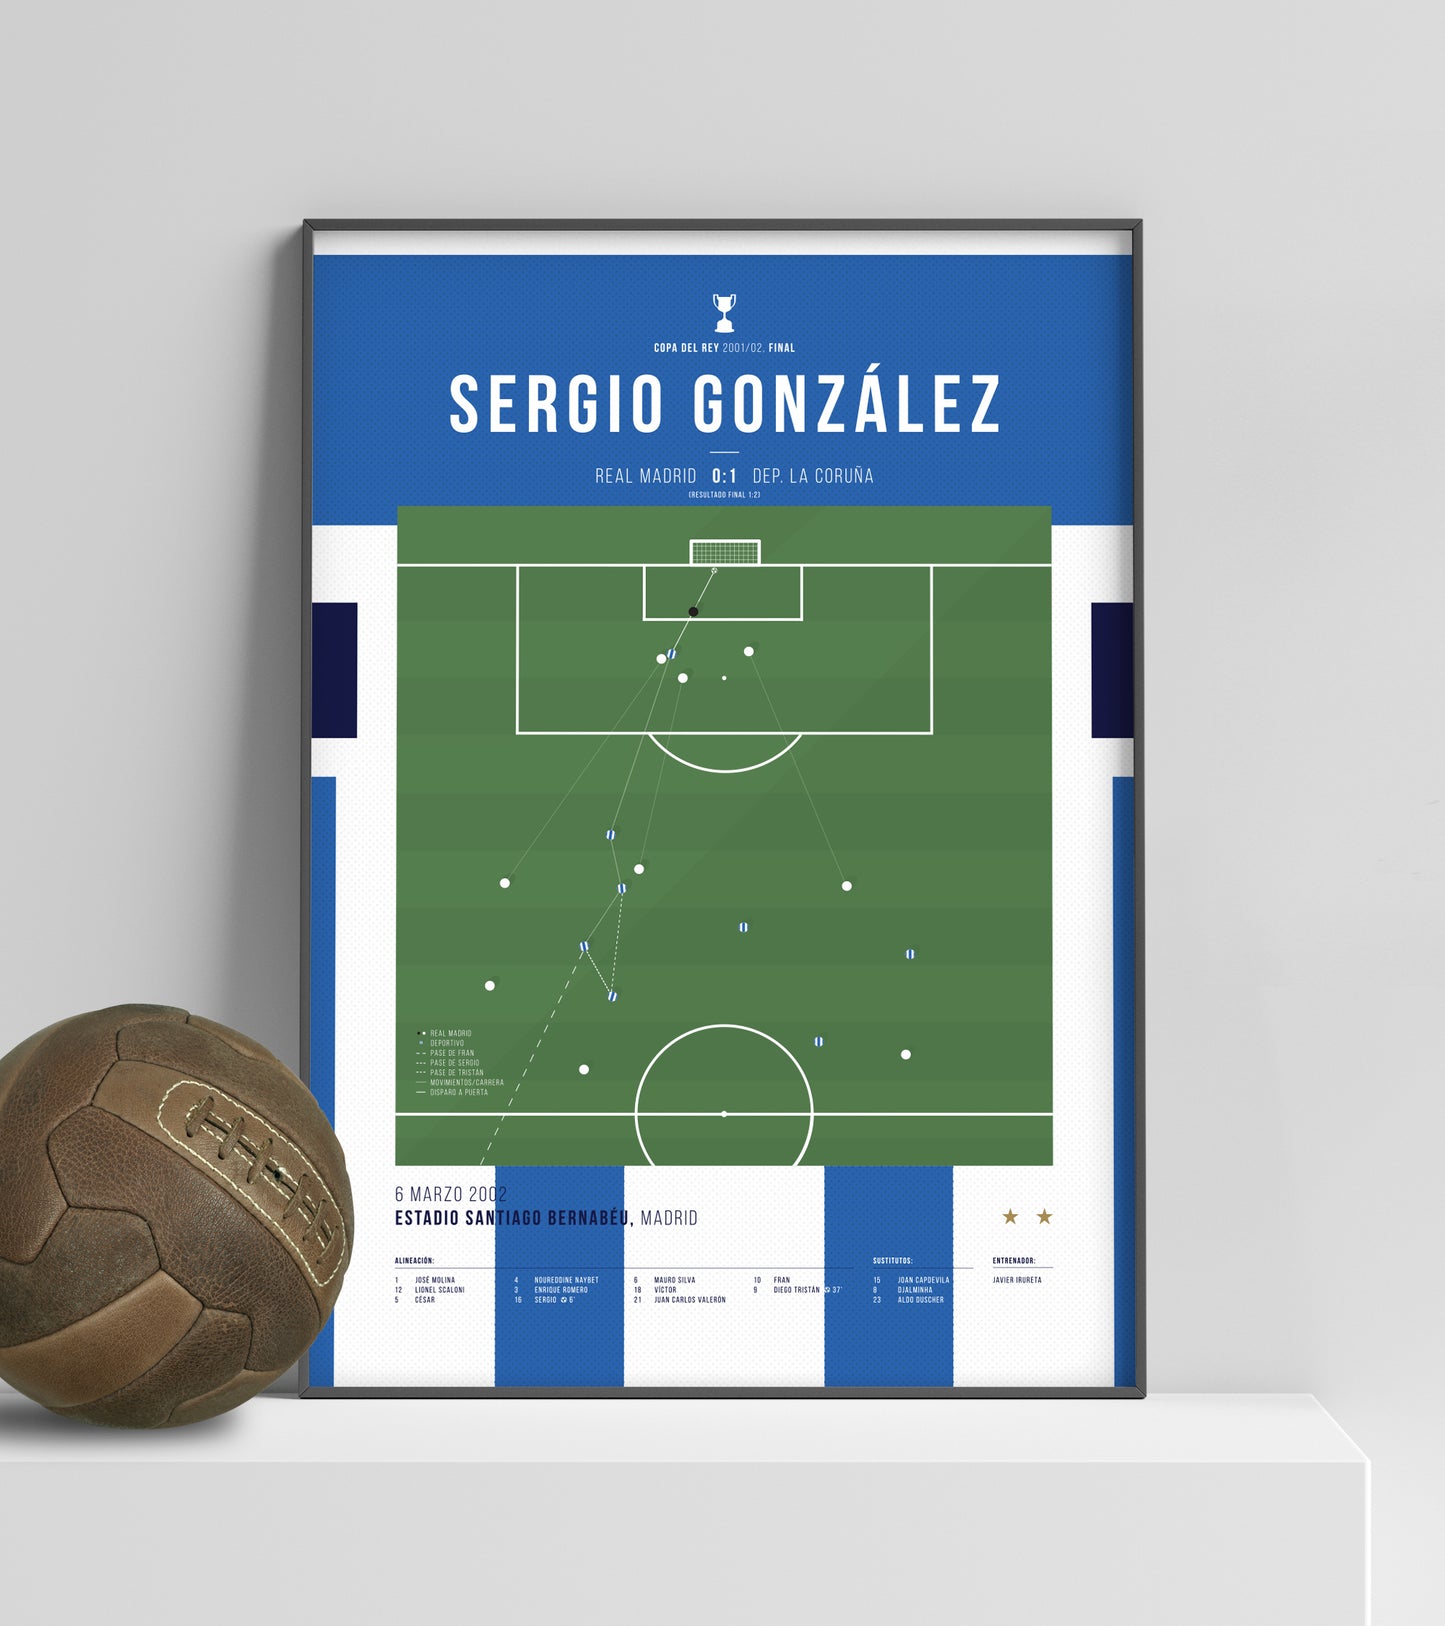 Sergio Gonzalez's goal in the historic Deportivos's 'Centenariazo' win at Bernabéu